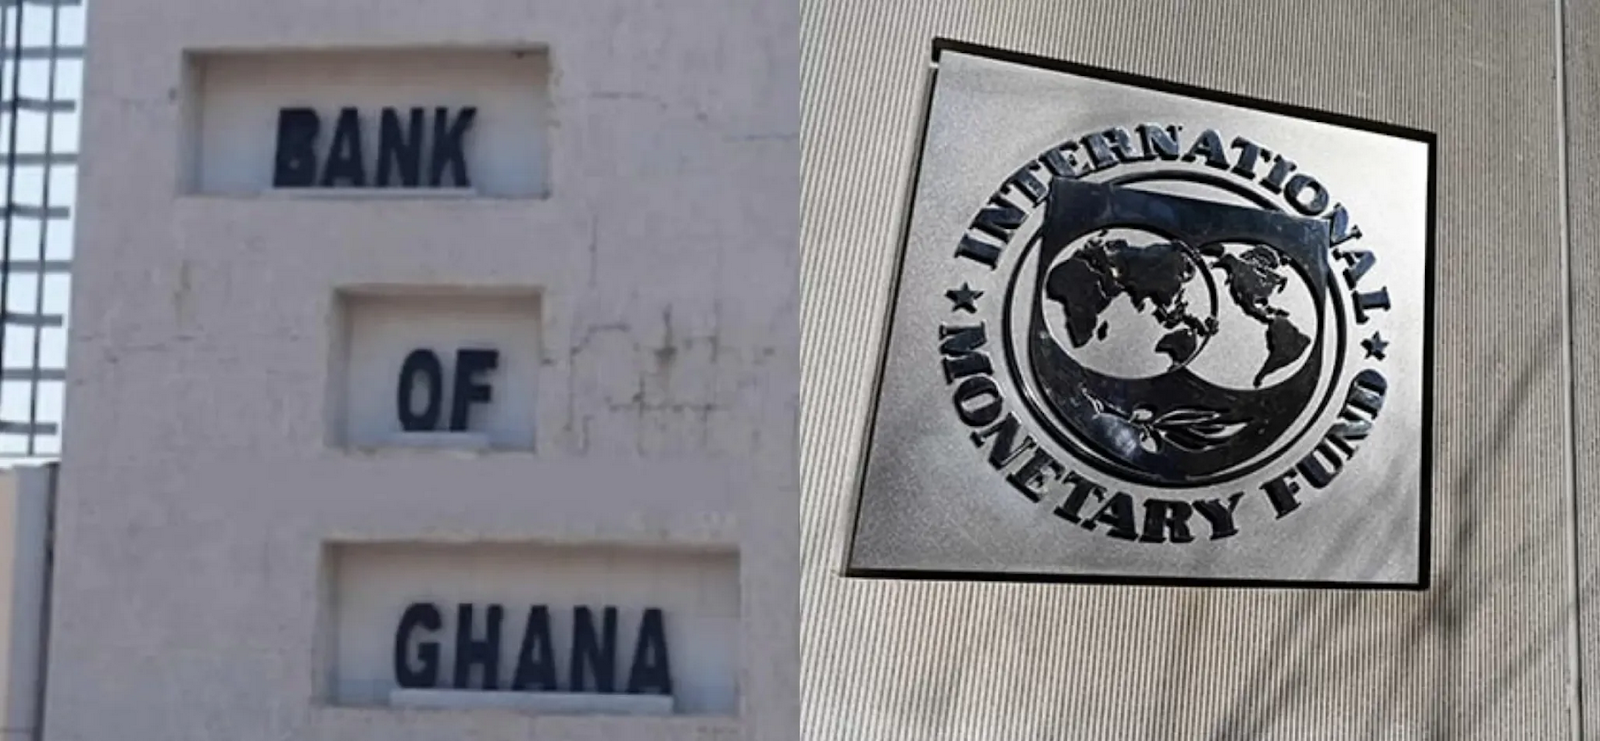 Bank of ghana